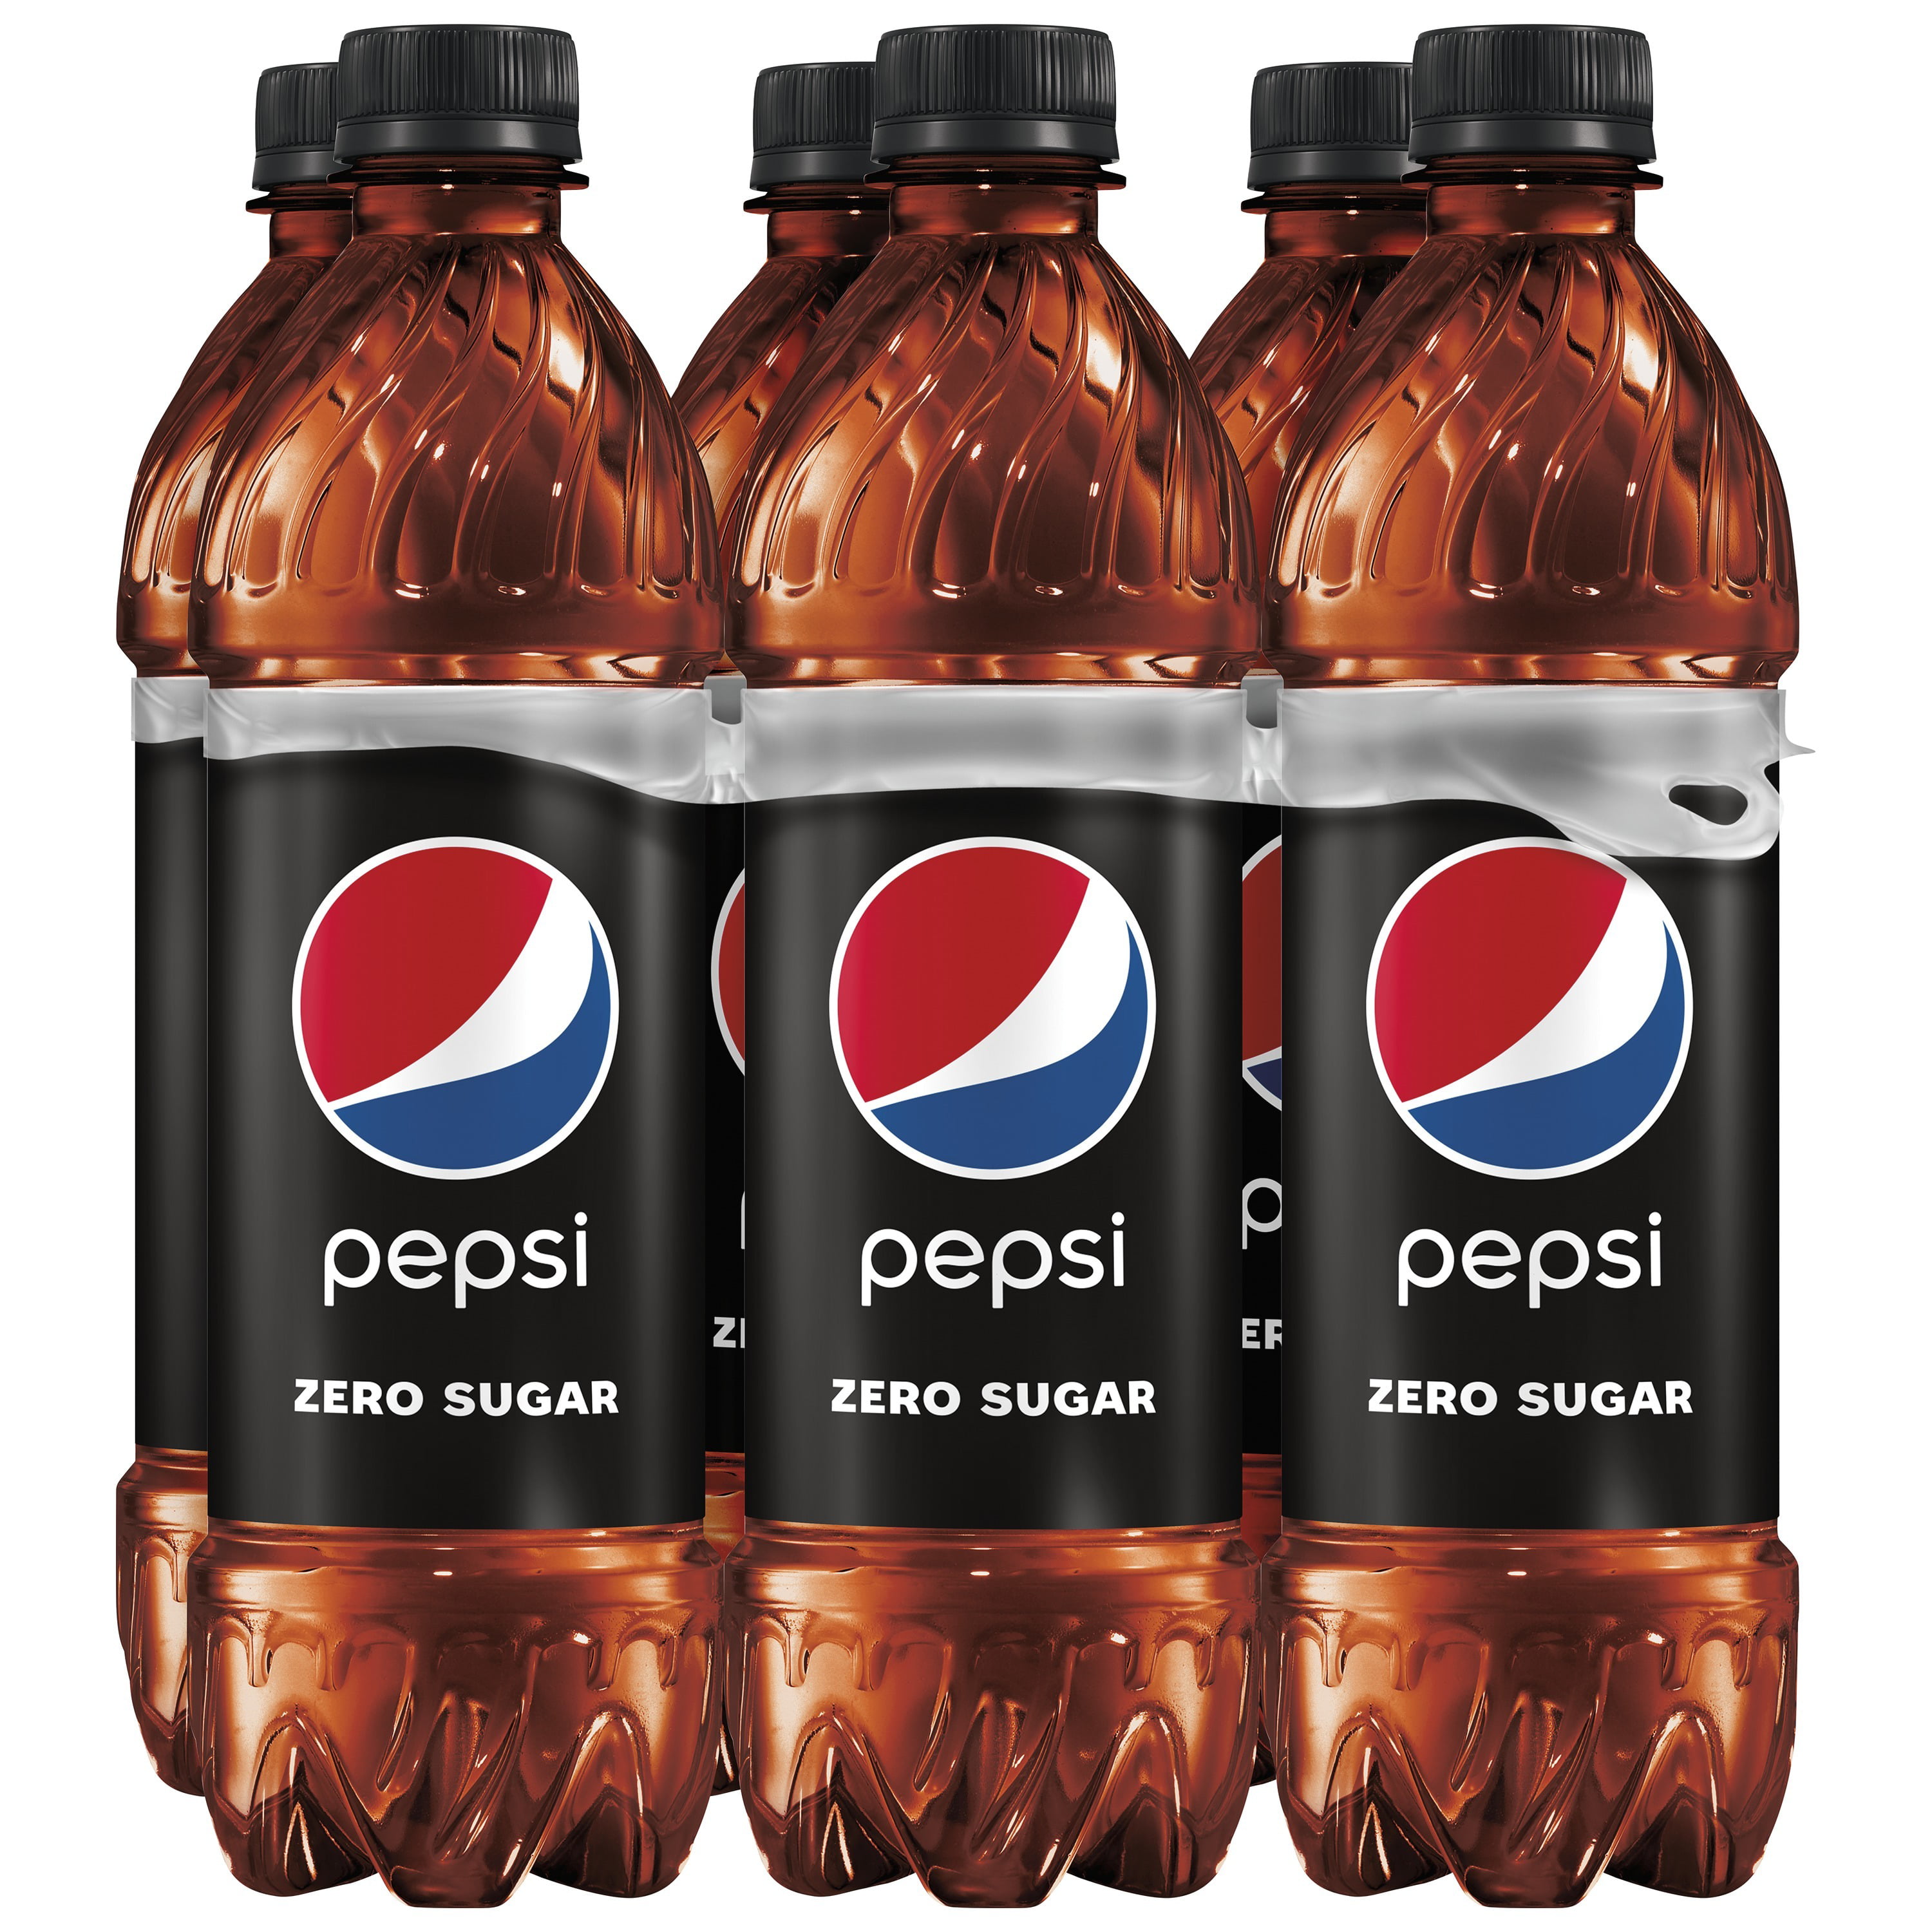 pepsi-cola-zero-sugar-soda-pop-16-9-oz-6-pack-bottles-walmart